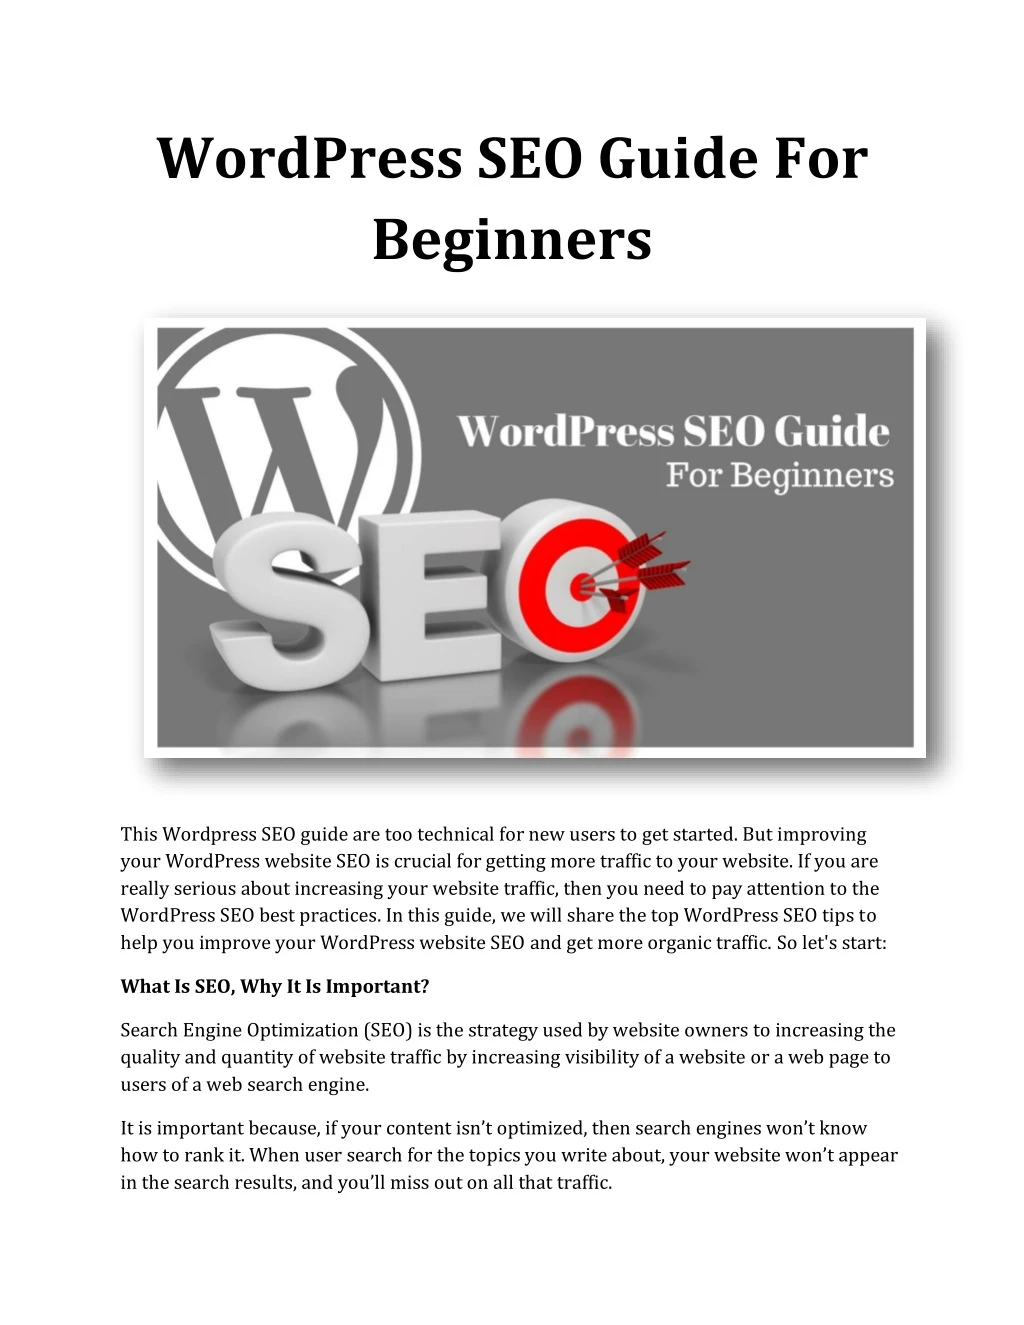 wordpress seo guide for beginners